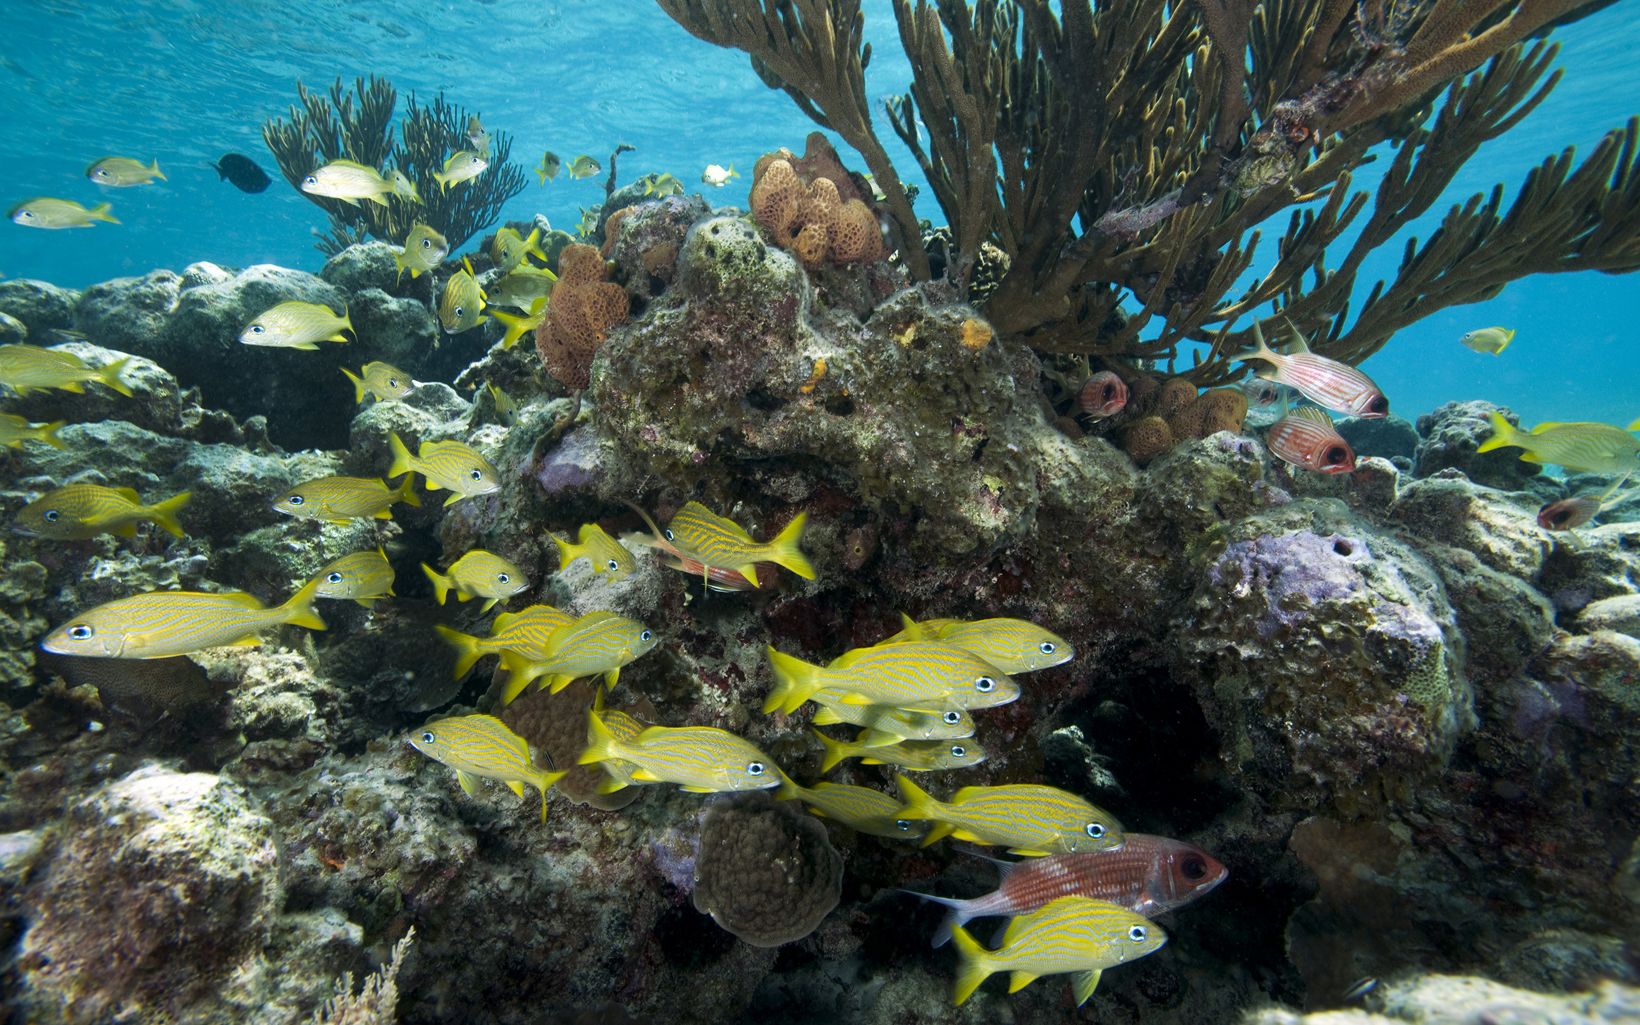 Fish swim through healthy reefs in the Exuma Cays.